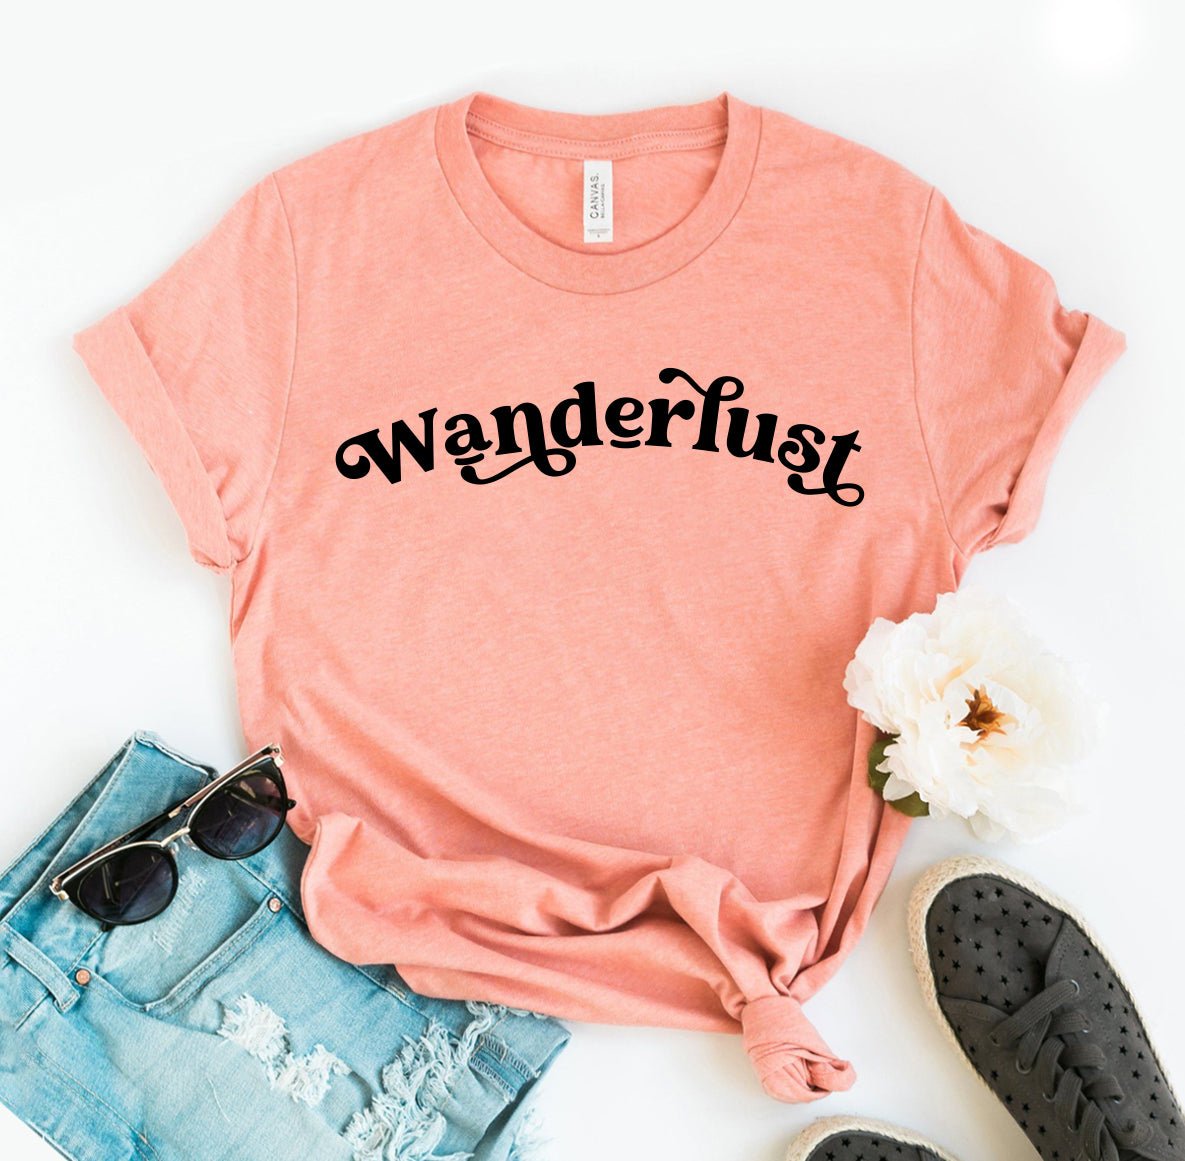 Wanderlust T-shirt - Kind Designs